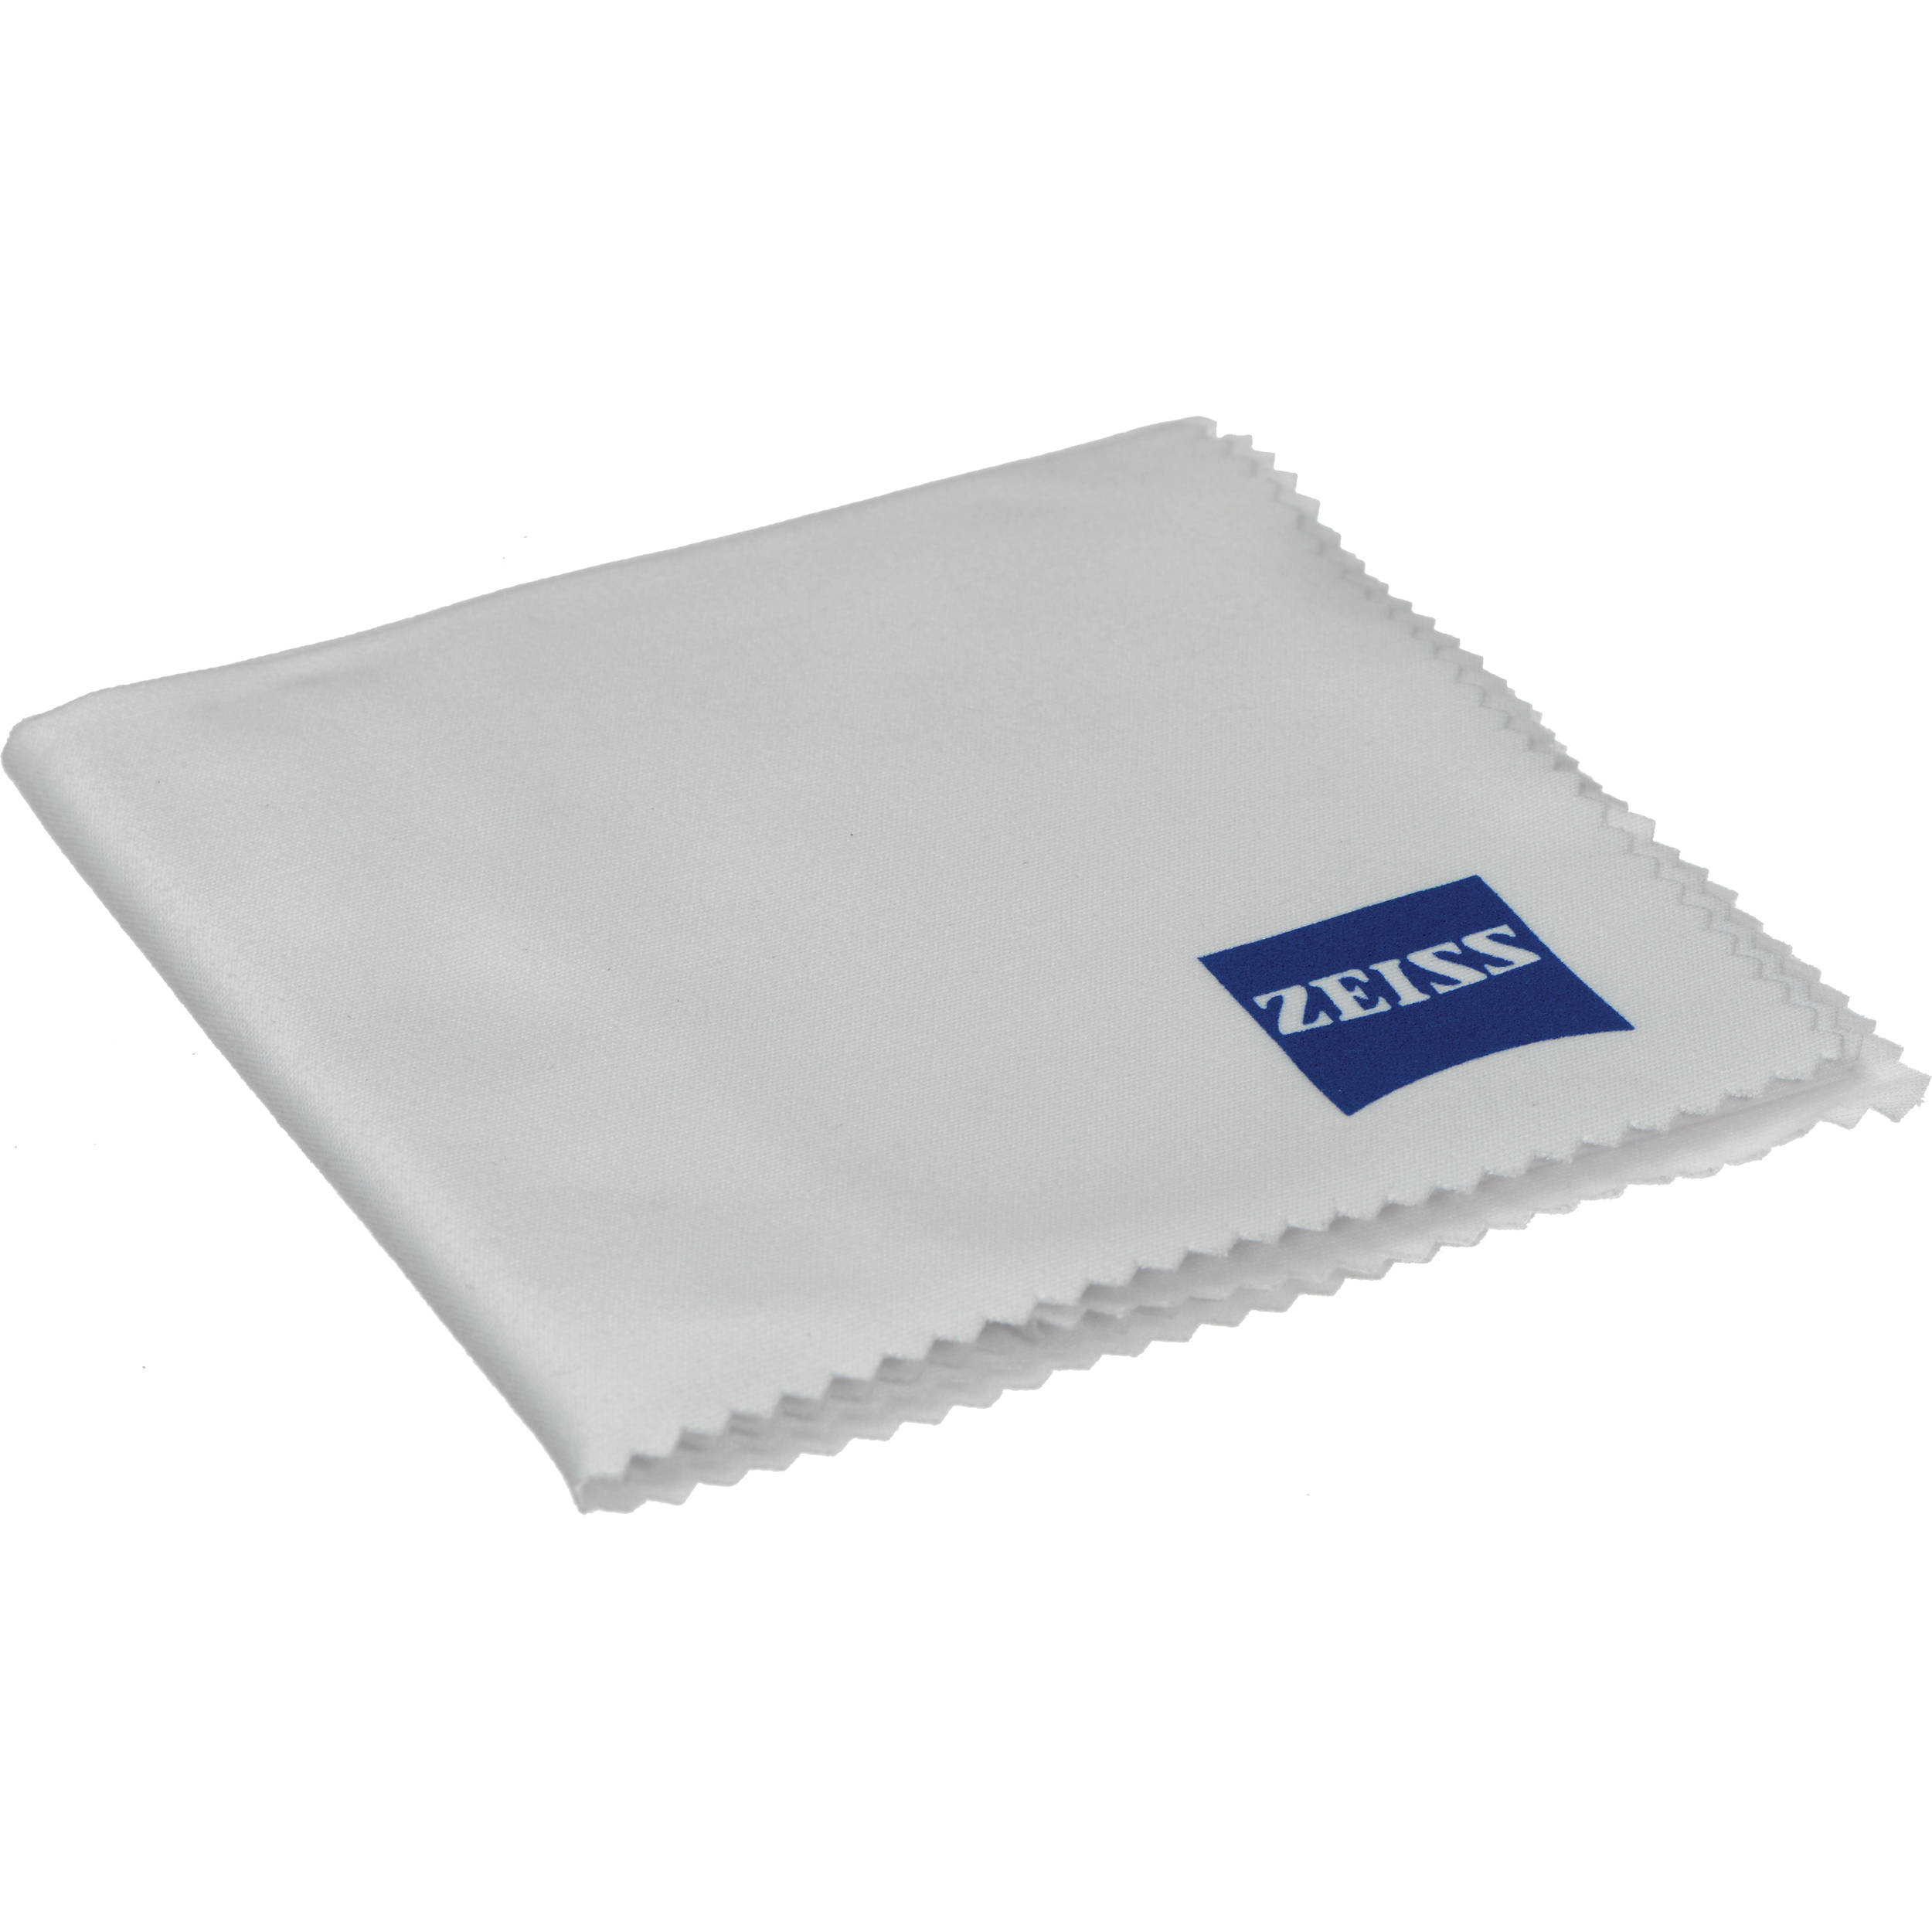 ZEISS Jumbo Microfiber Cloth (12 x 16) 2105 355 BH